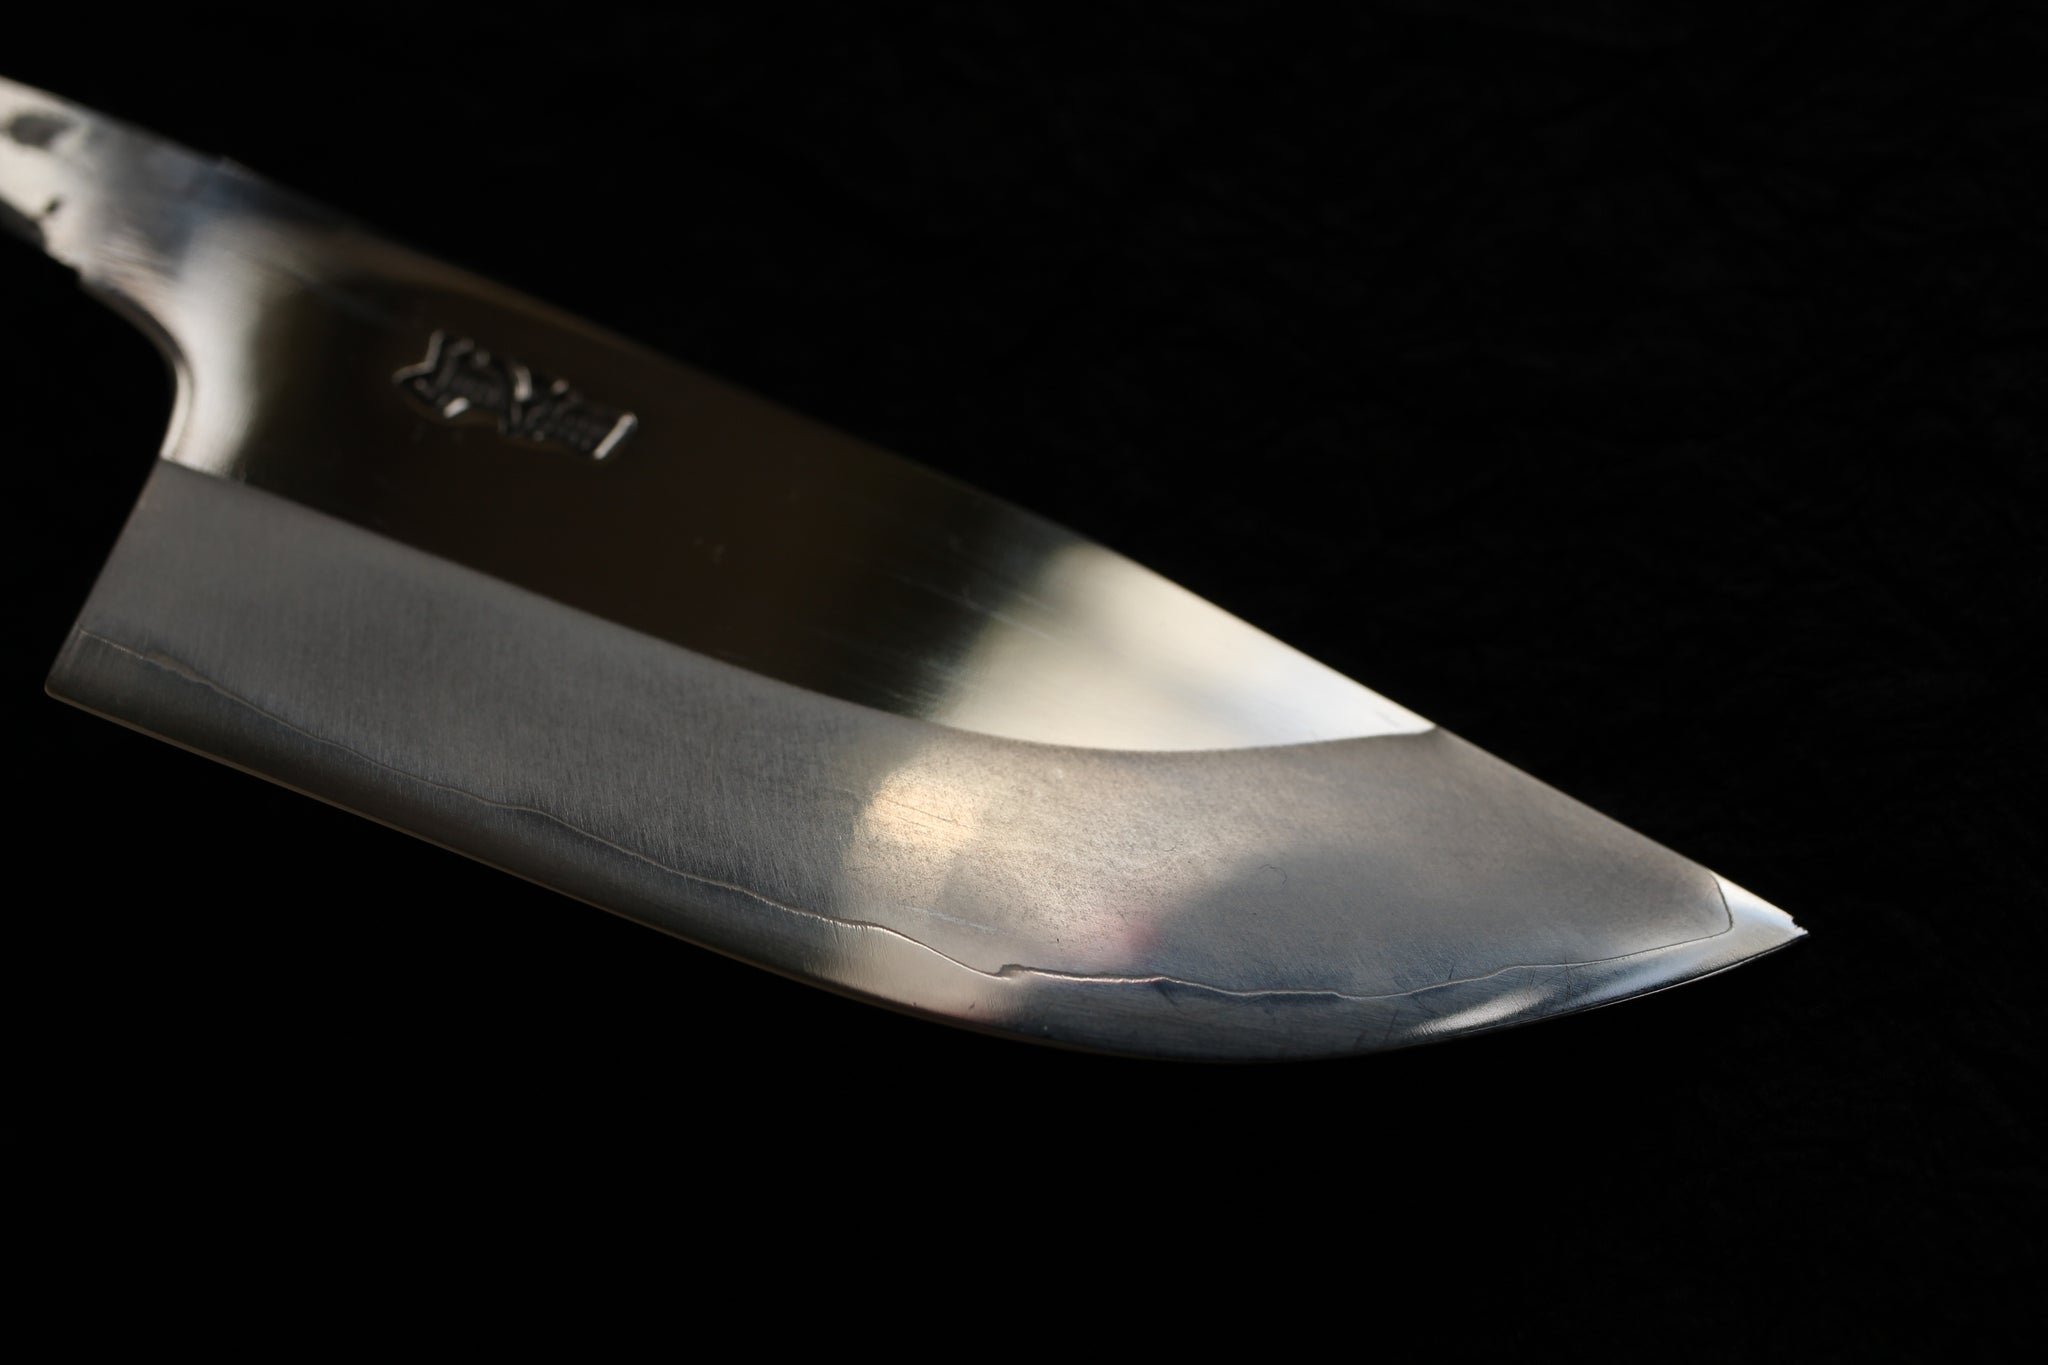 Kurotori knife